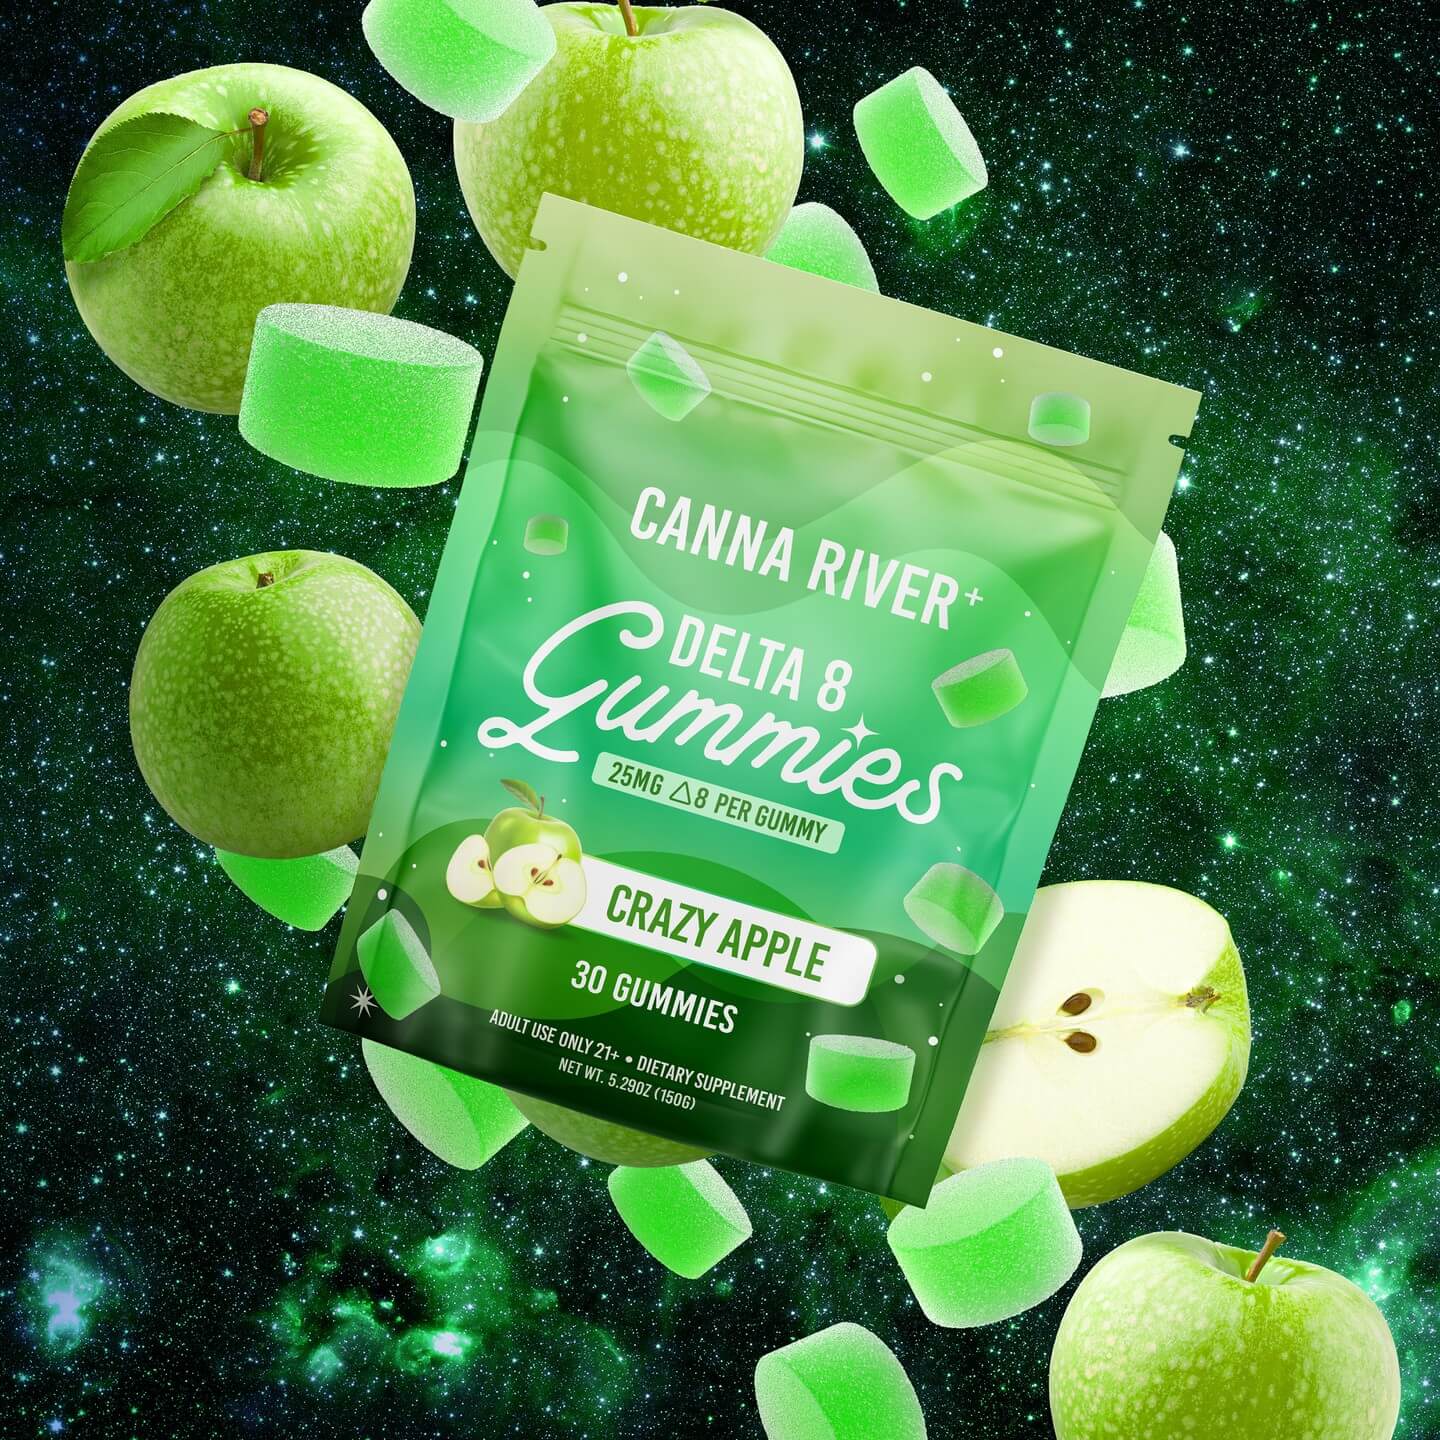 Canna River Delta 8 THC Gummies Crazy Apple 